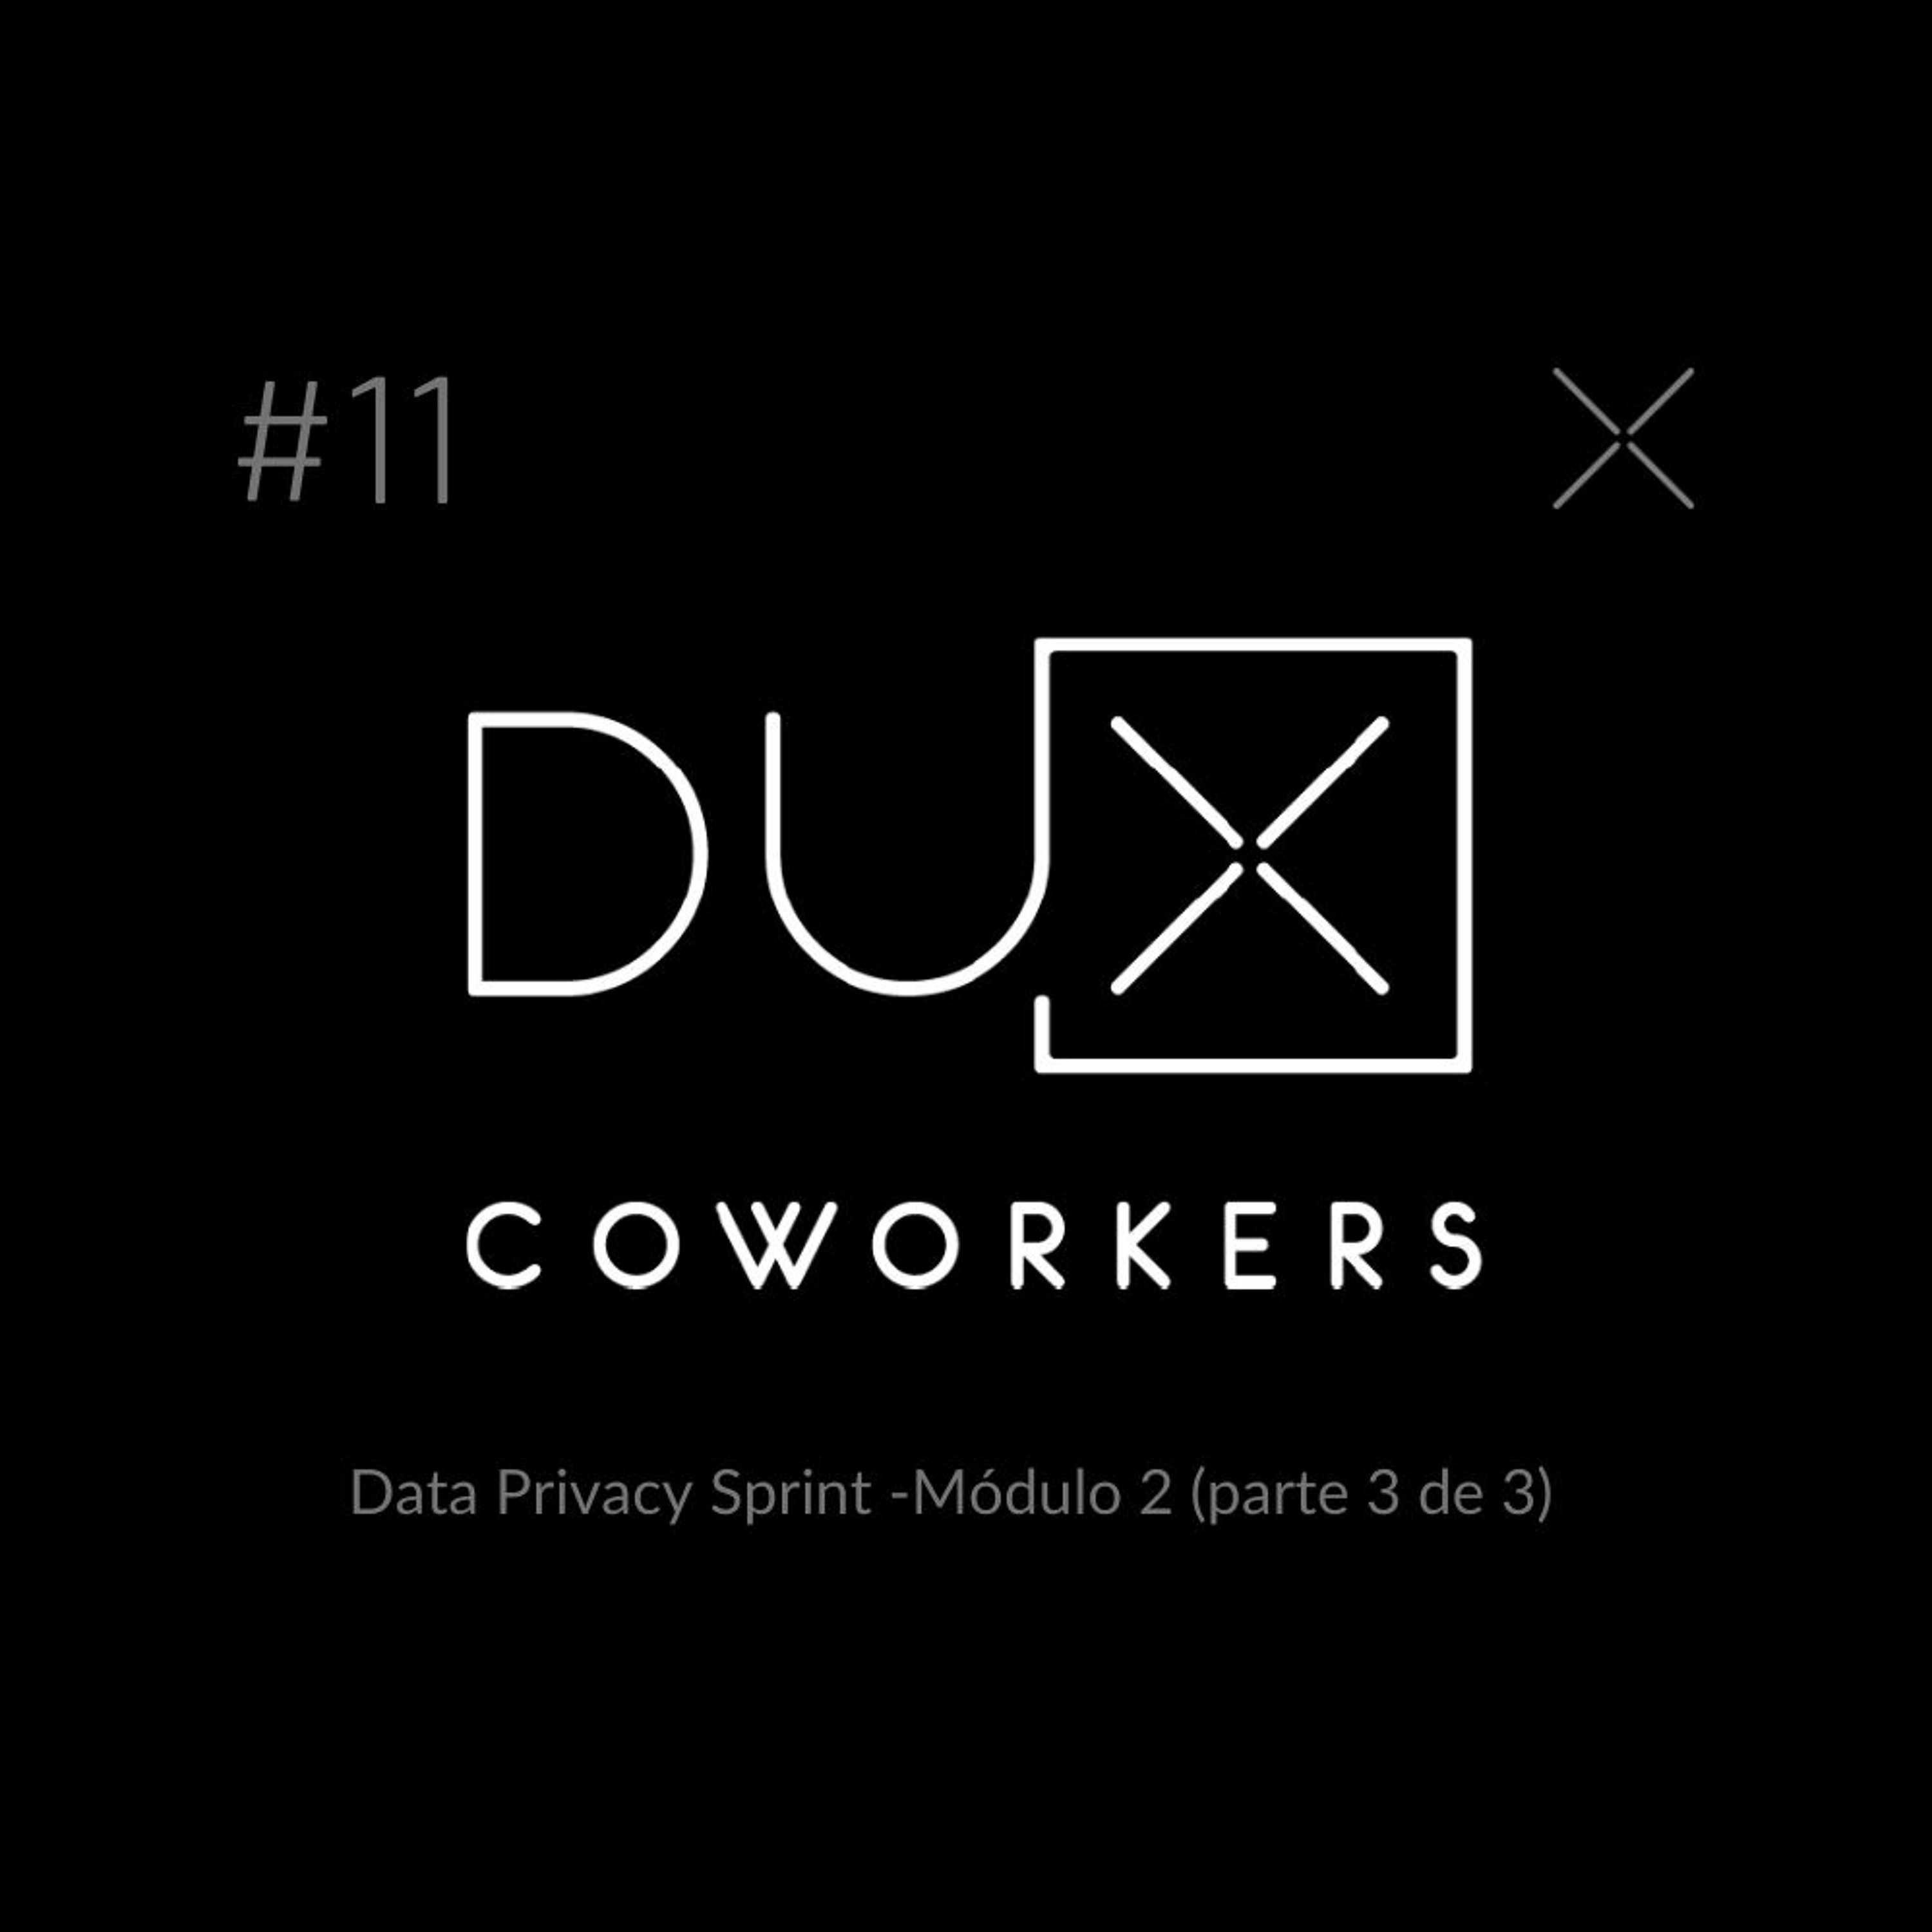 024- DUX#11 -Data Privacy Sprint Modulo 2 (3)